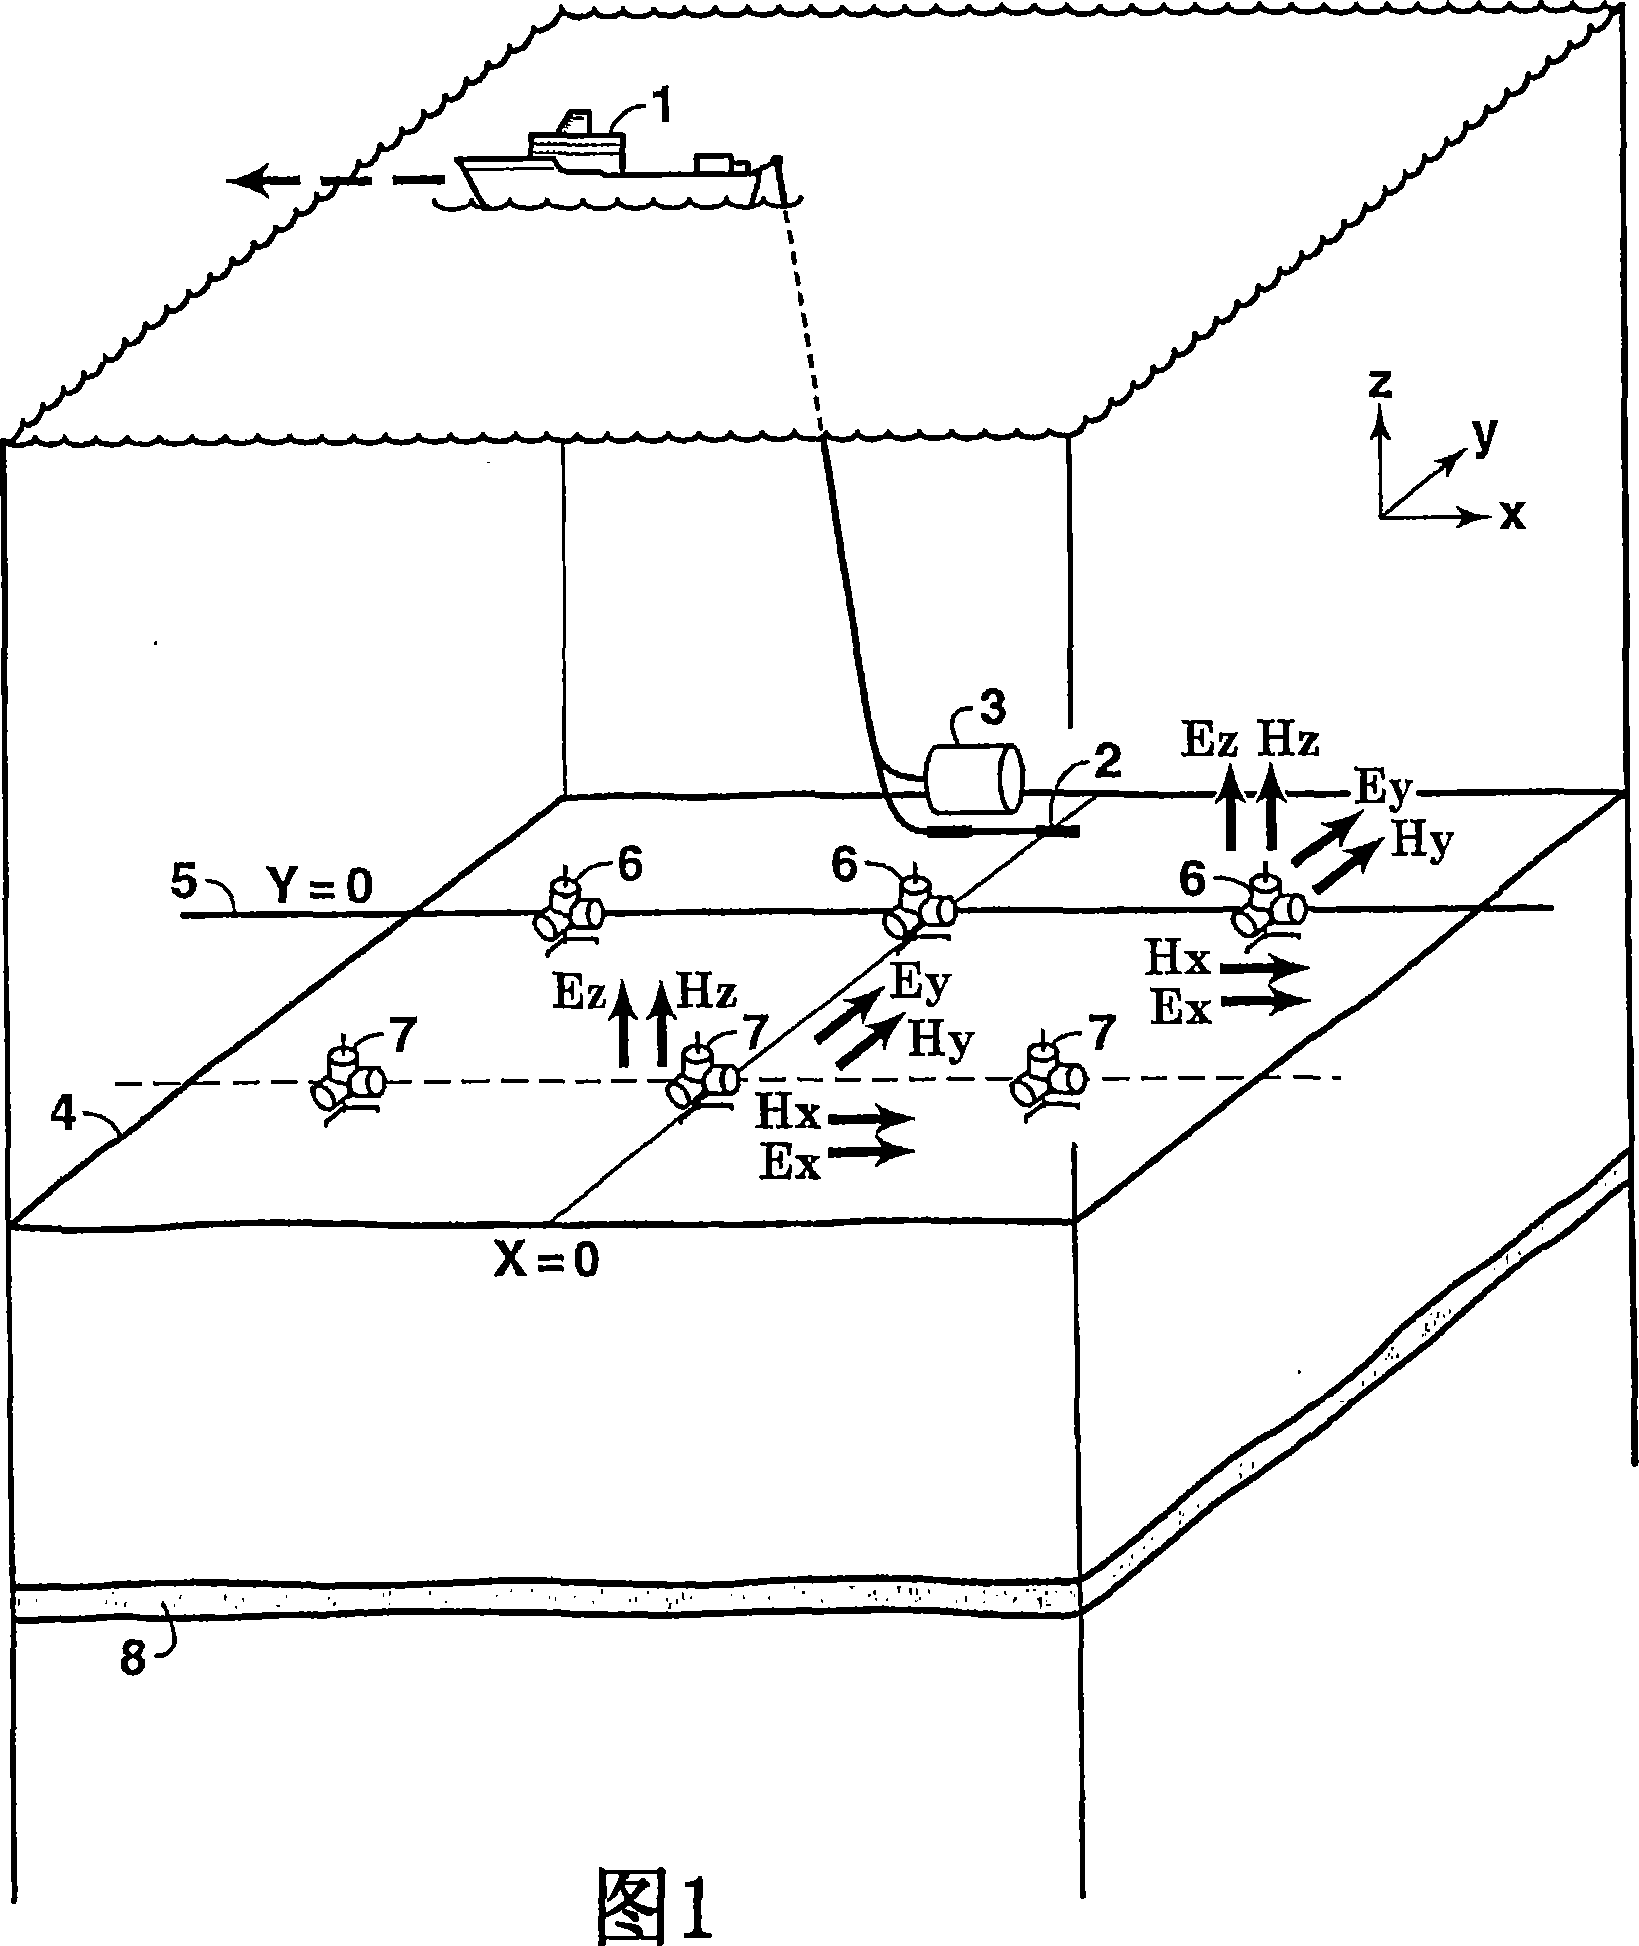 Method for determining earth vertical electrical anisotropy in marine electromagnetic surveys